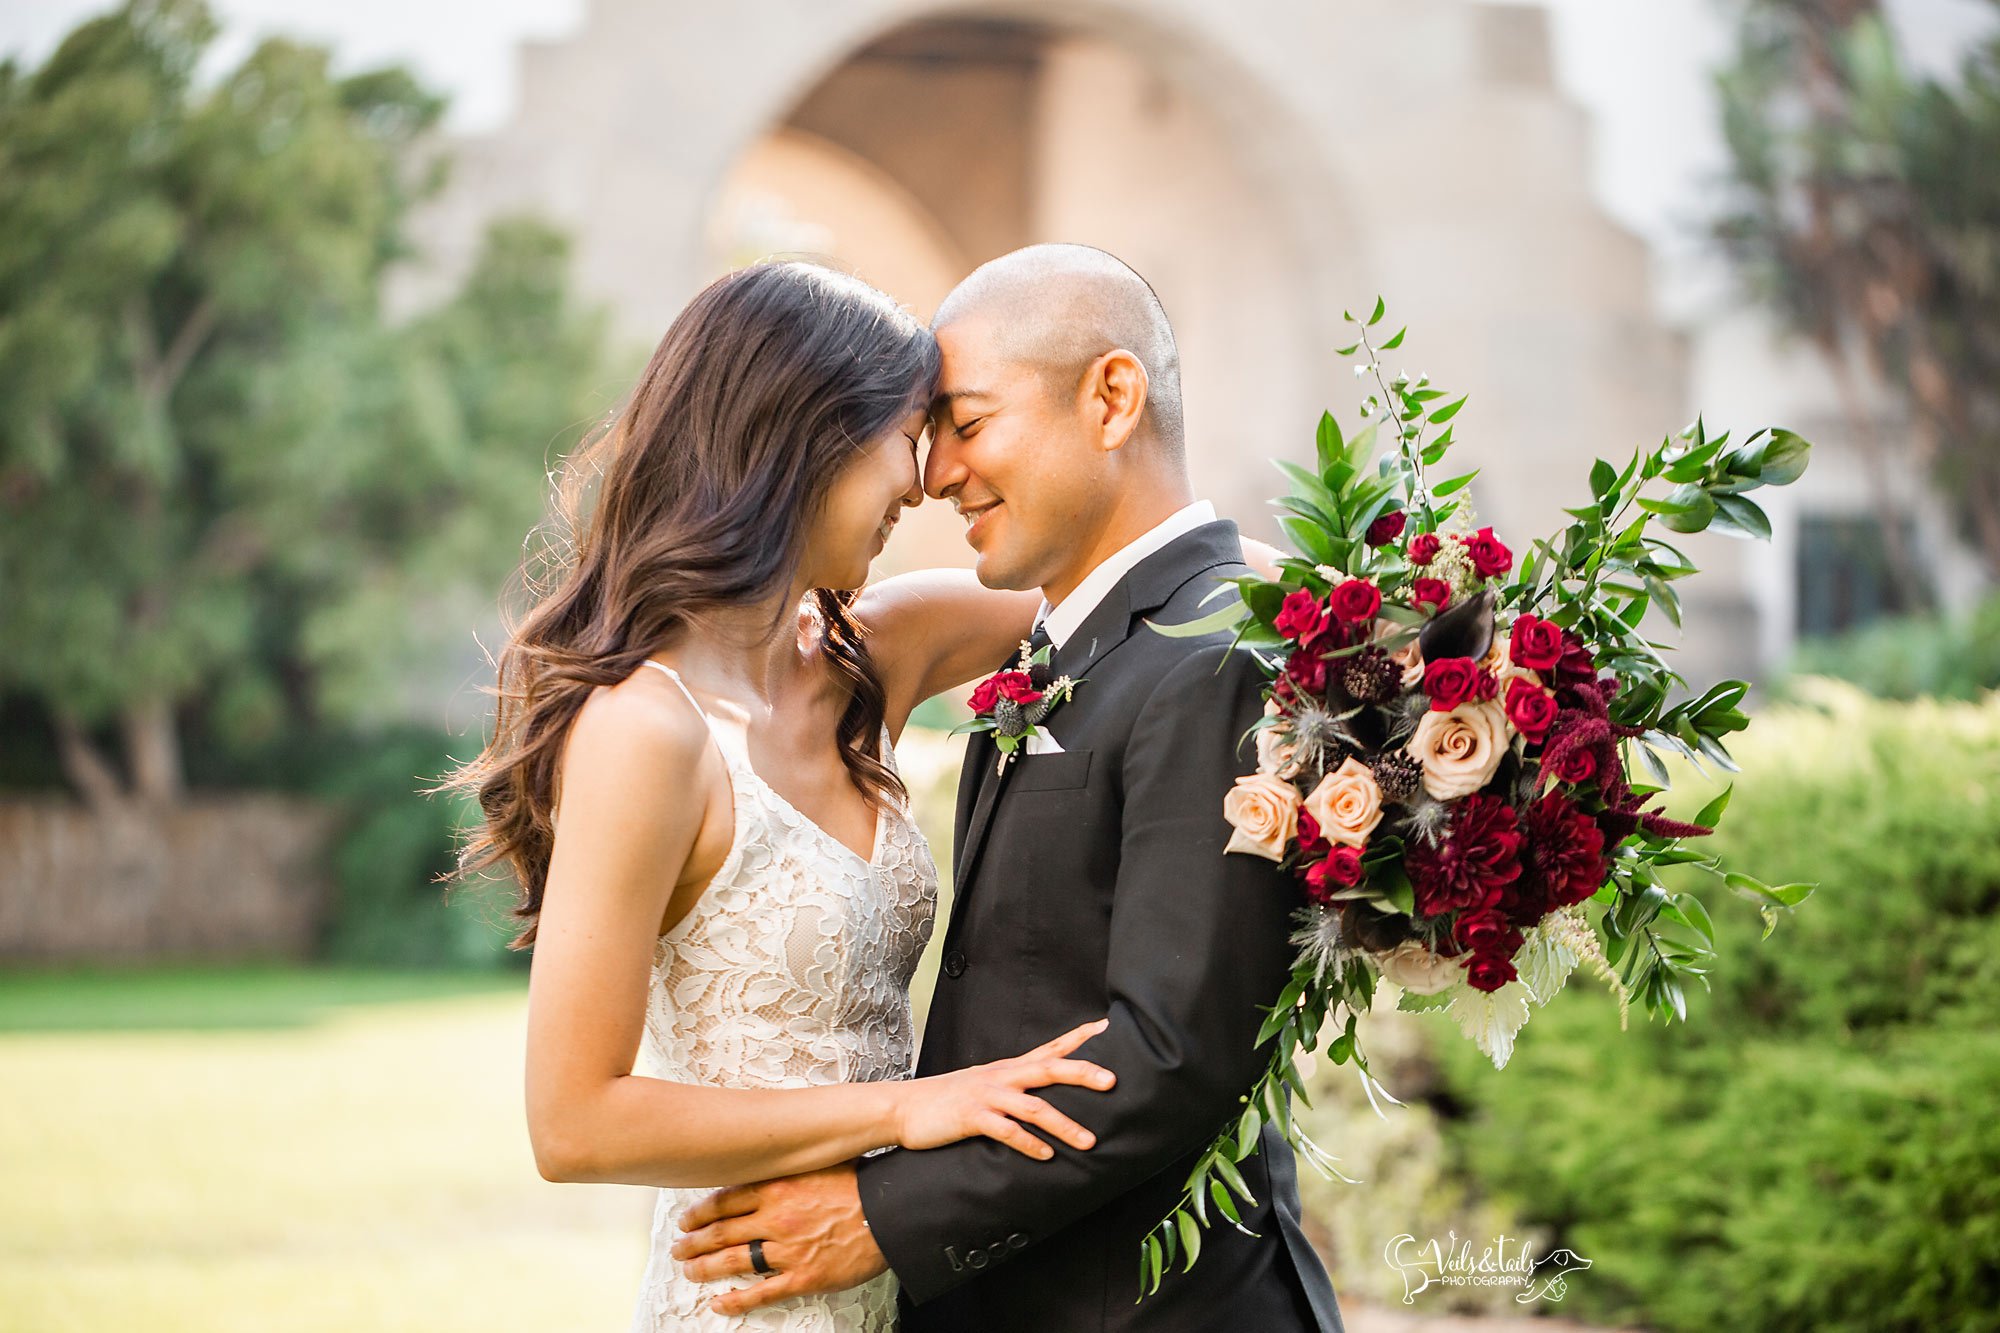 Santa Barbara Courthouse wedding photographer and florals